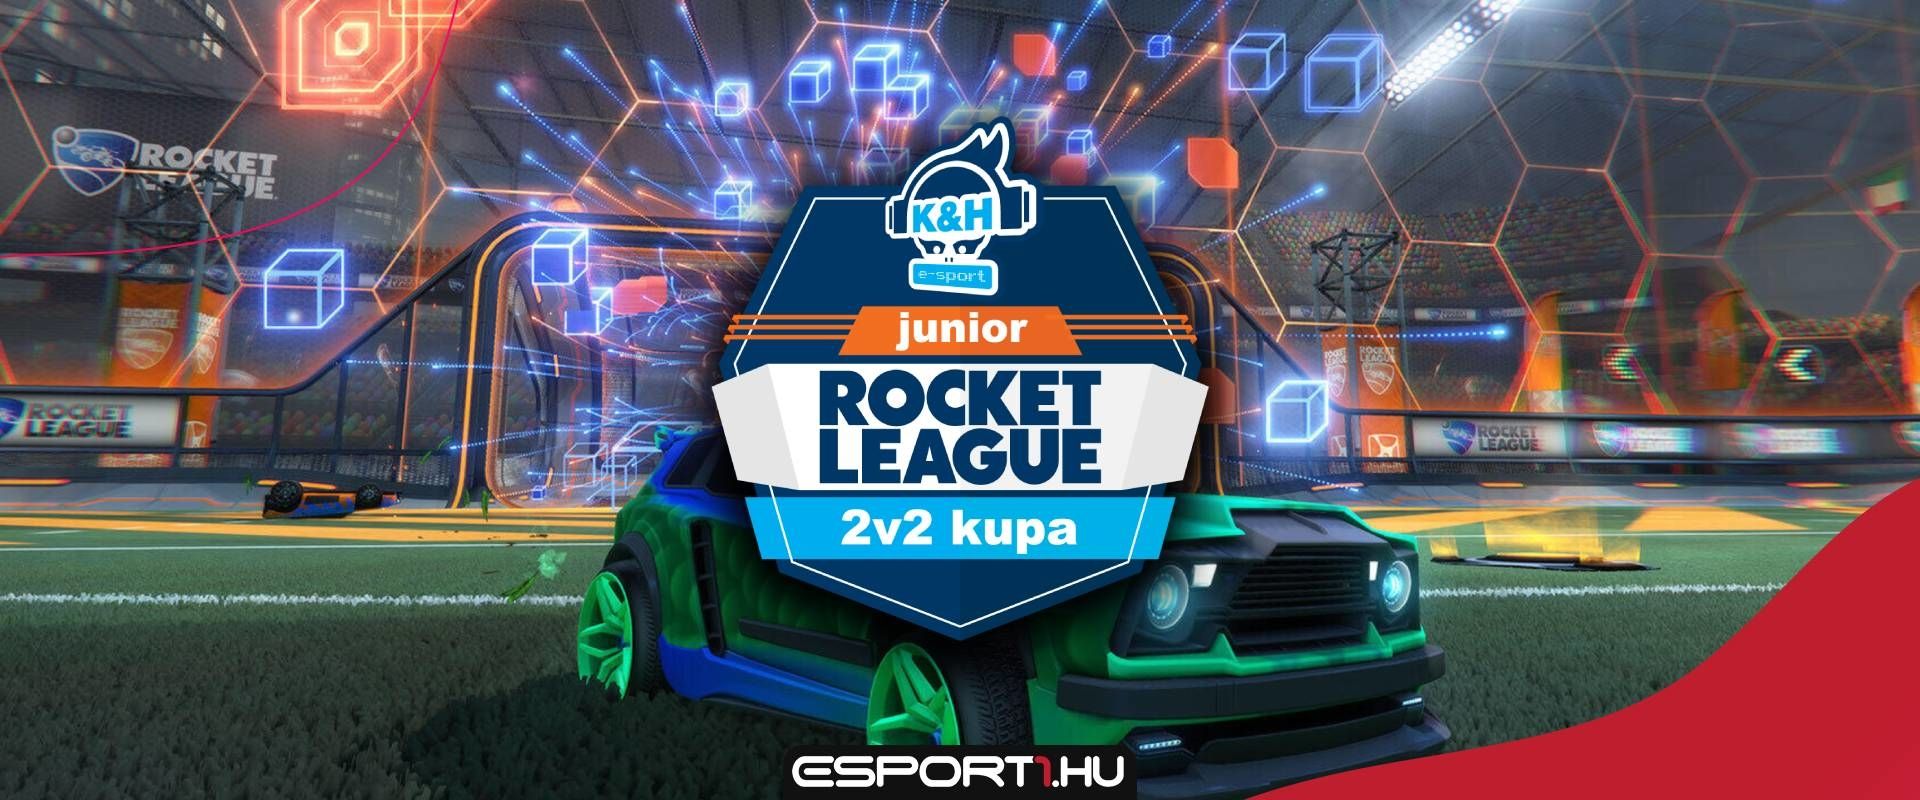 K&H Junior Rocket League 2v2 Kupa – Gólzáporos napon derült fény a verseny bajnokára